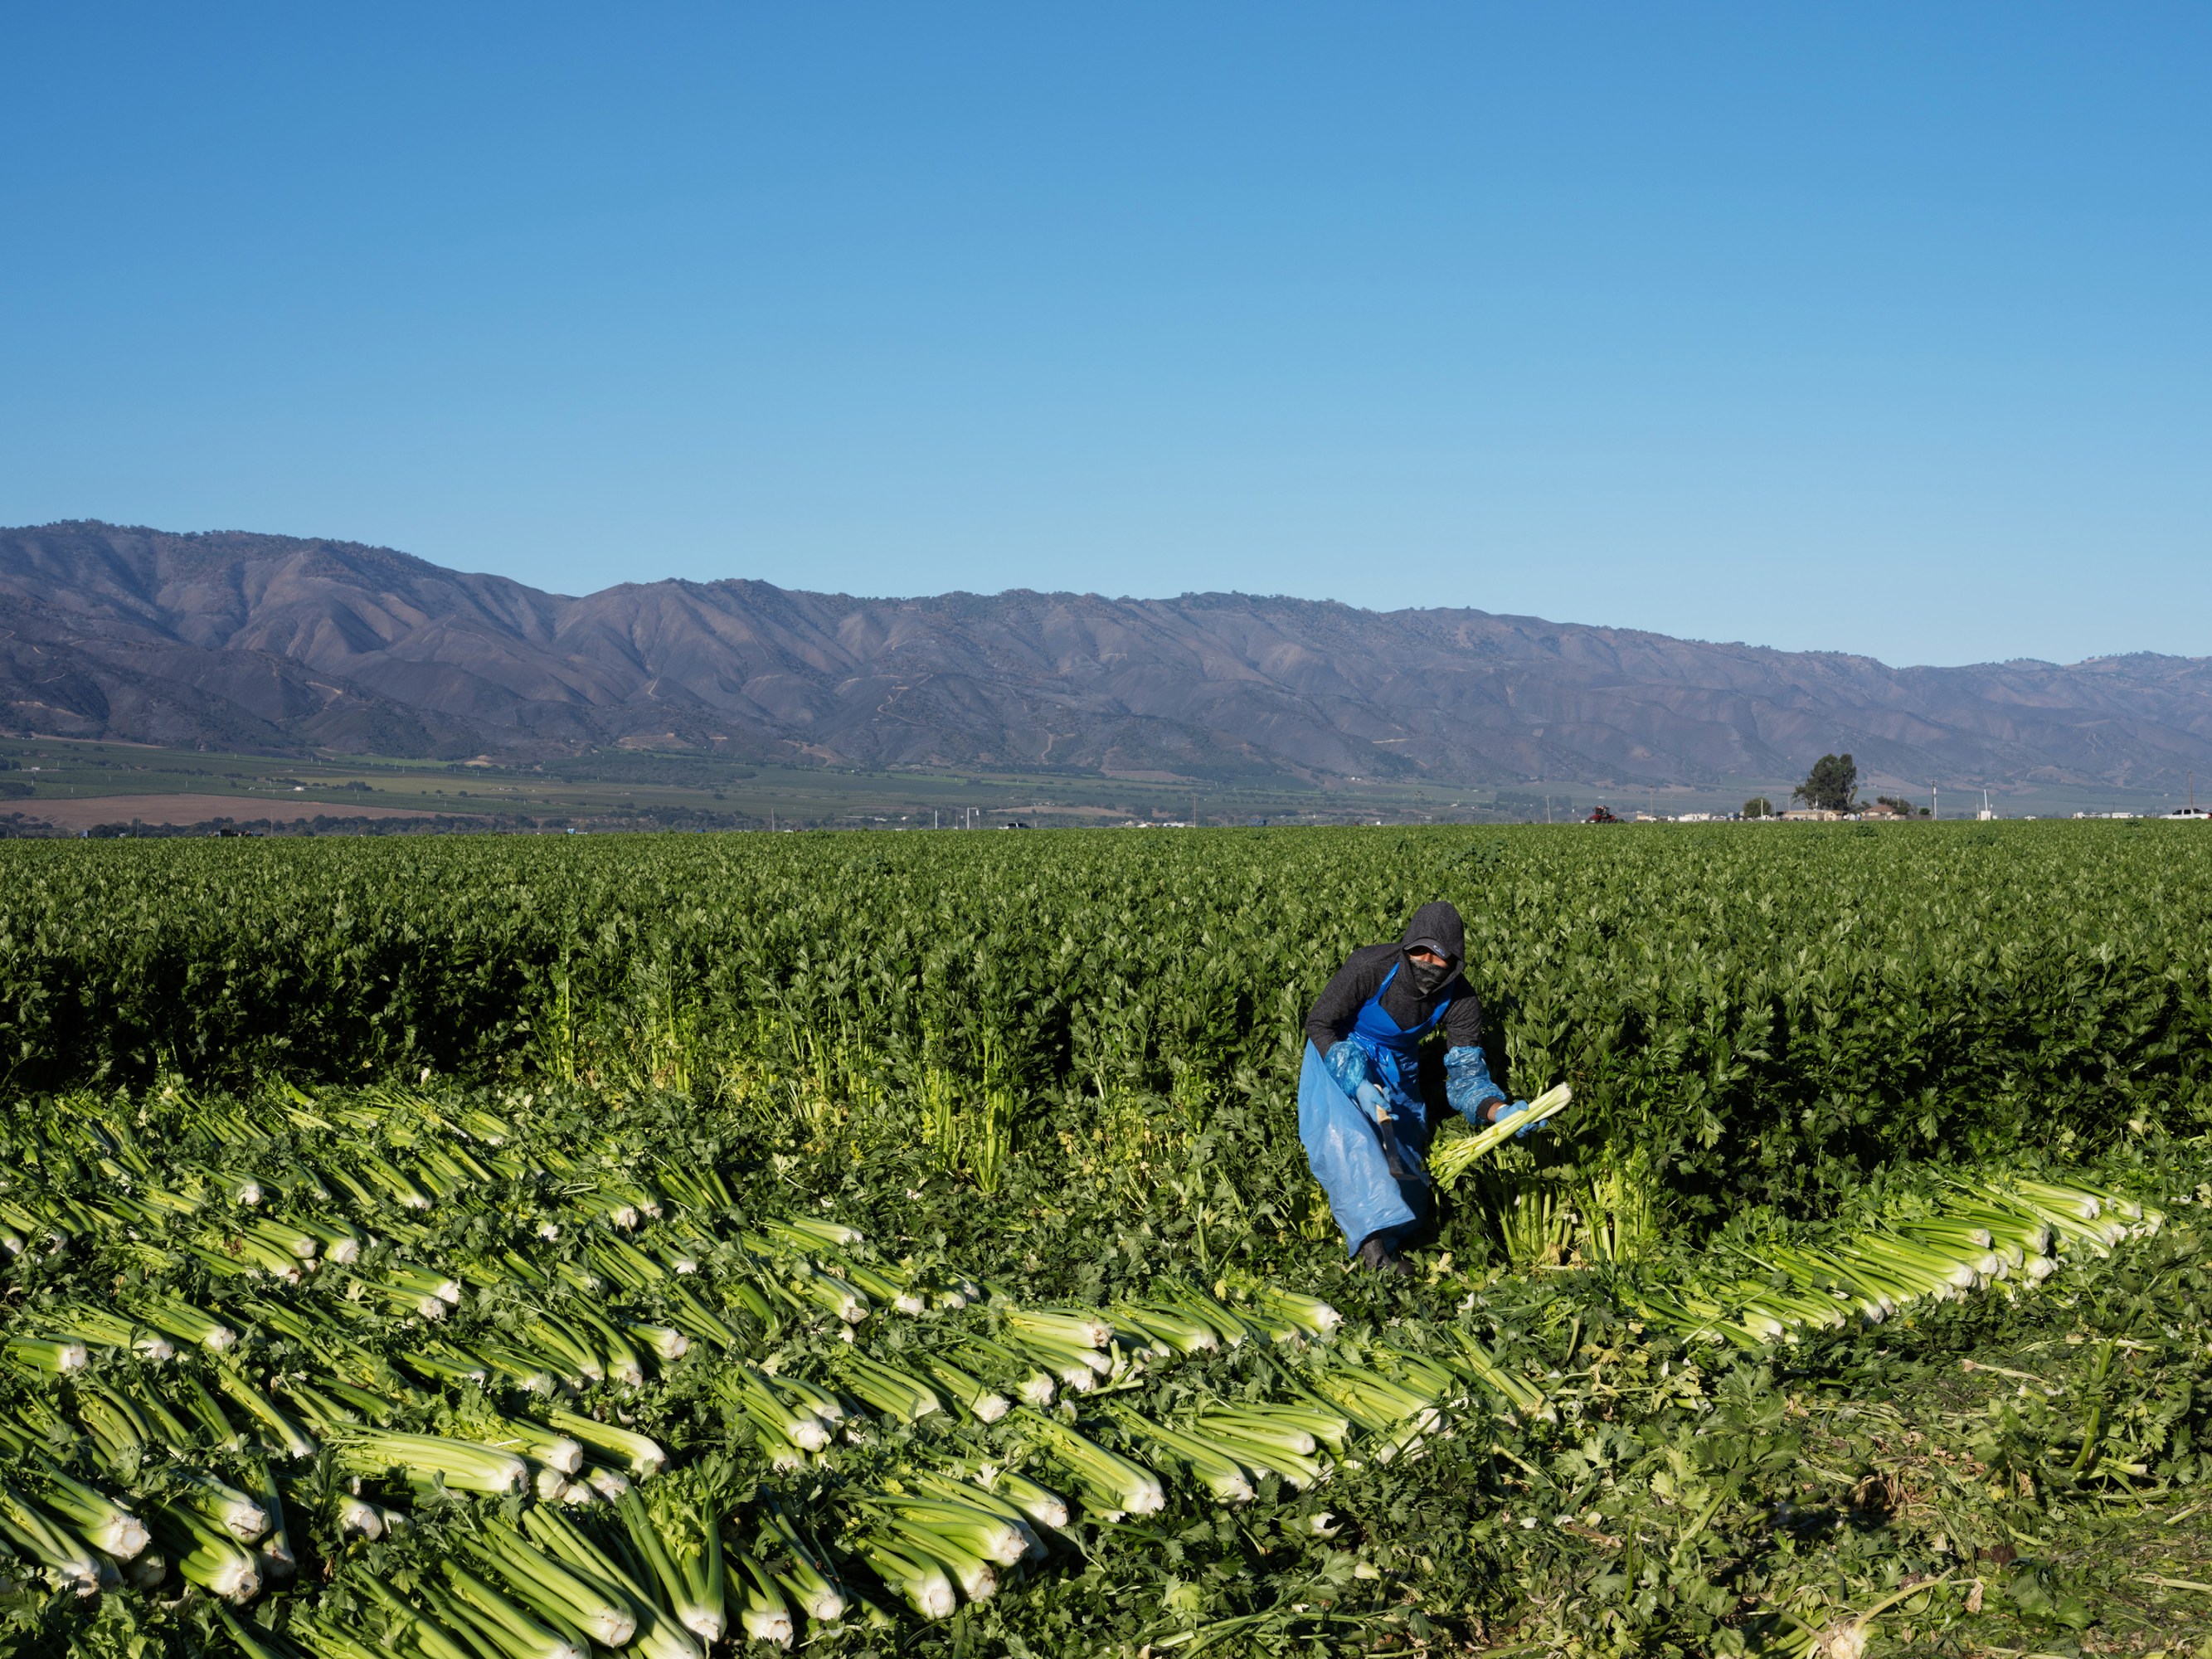 Workers harvest celery crops